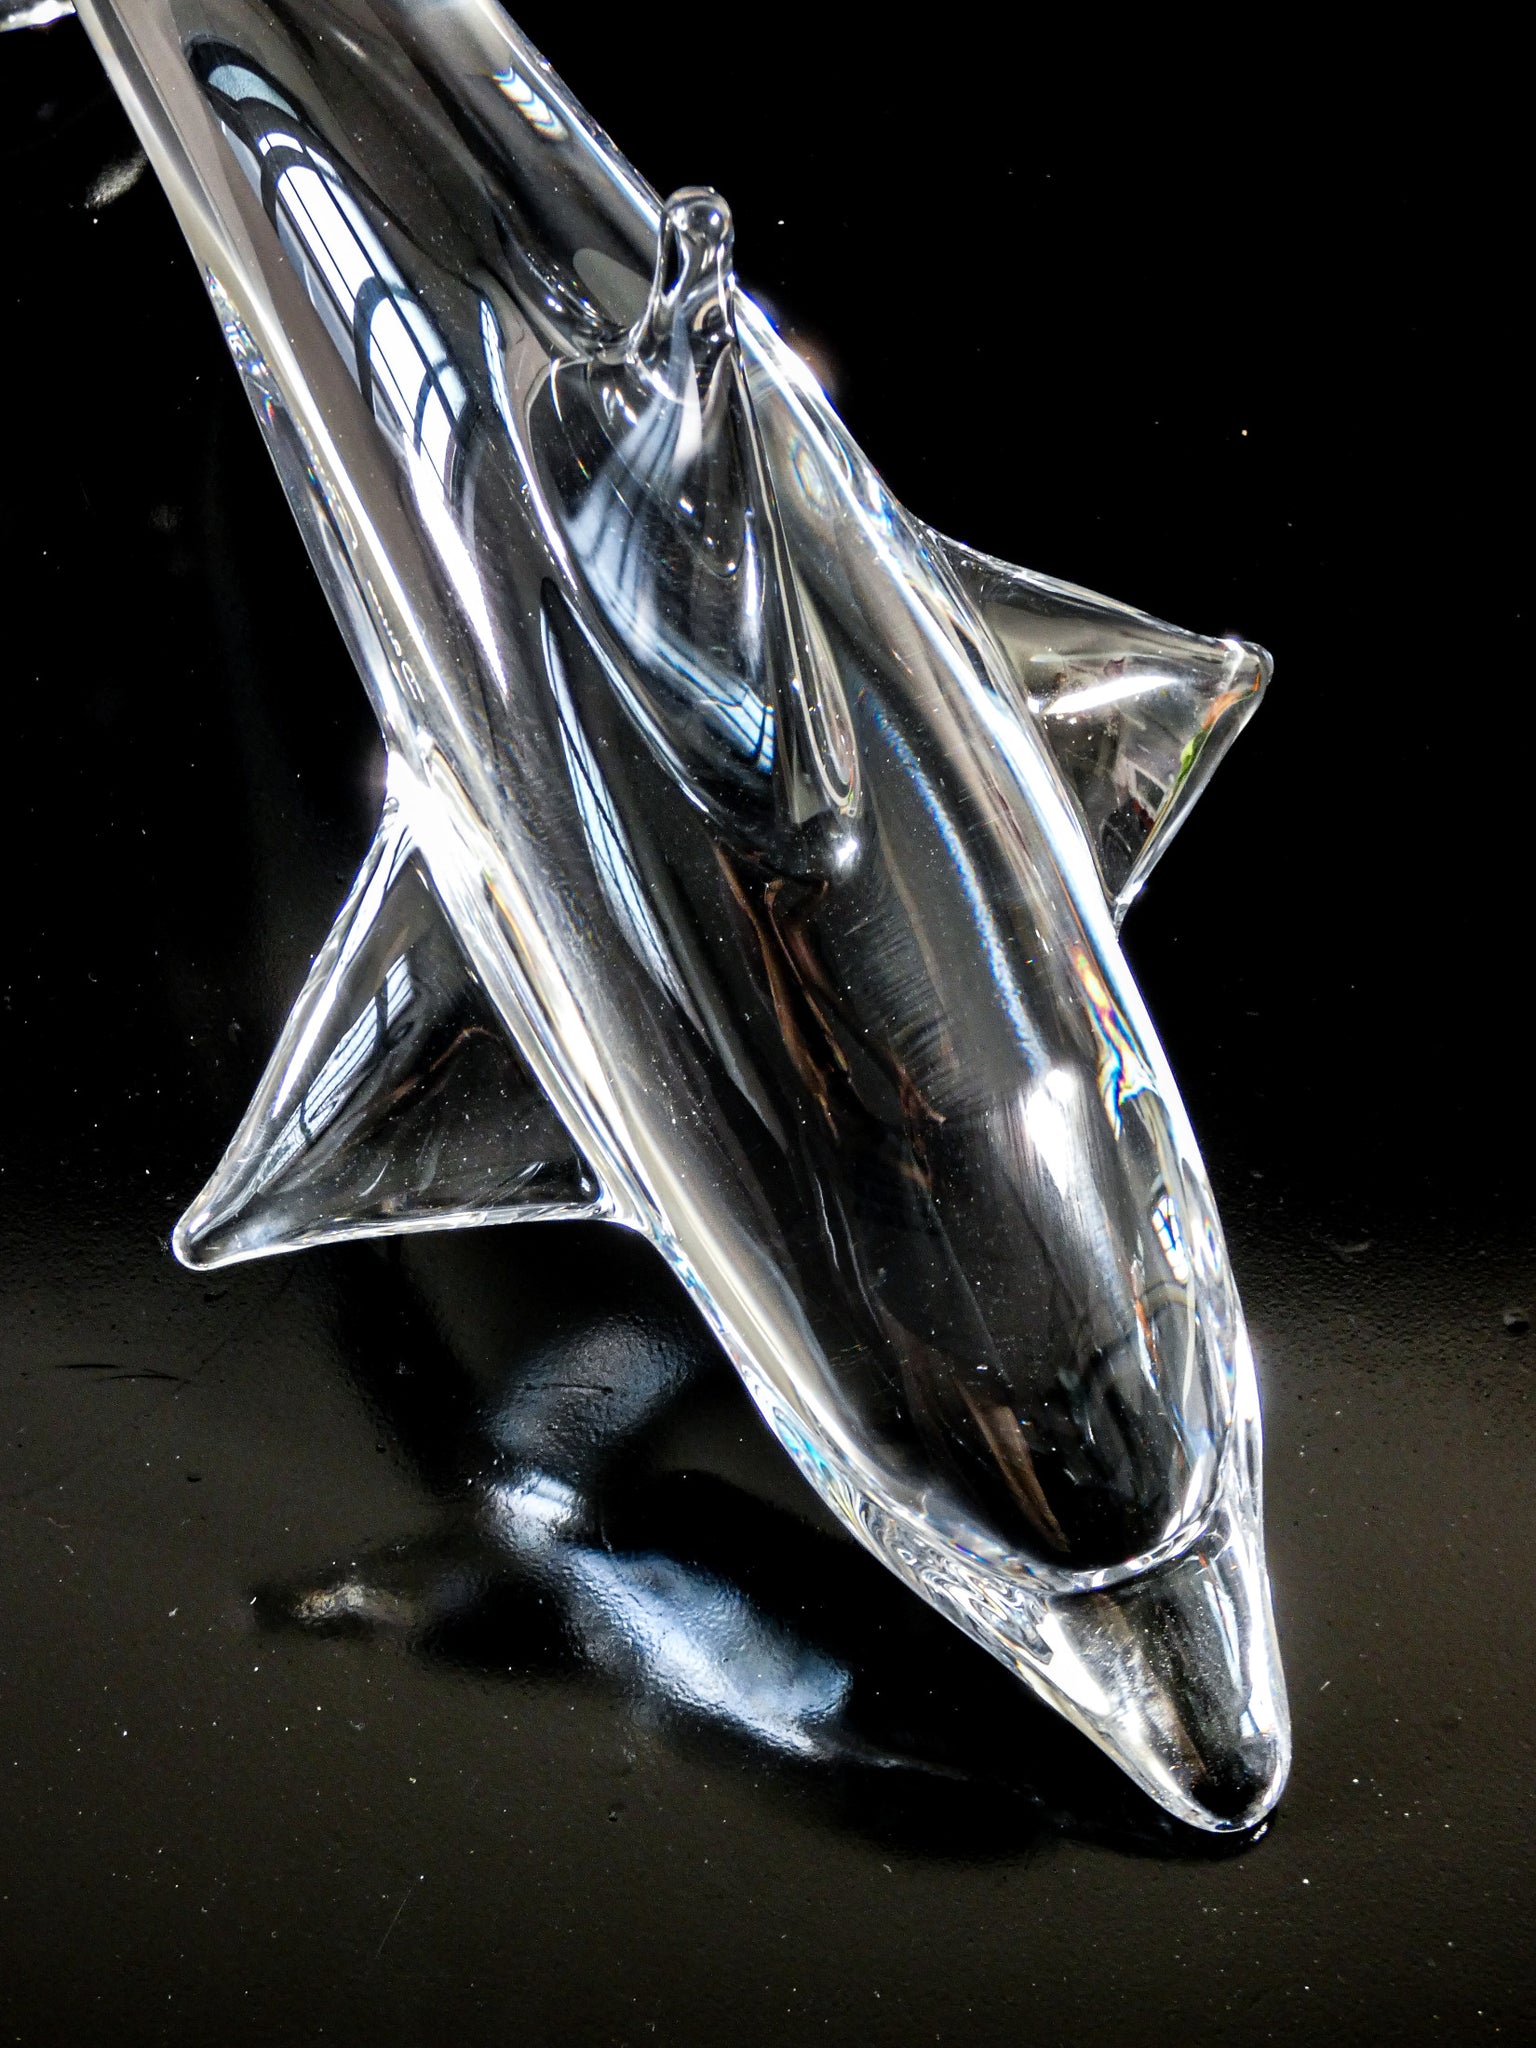 scultura delfino daum france vetro soffiato trasparente mare oceano francia